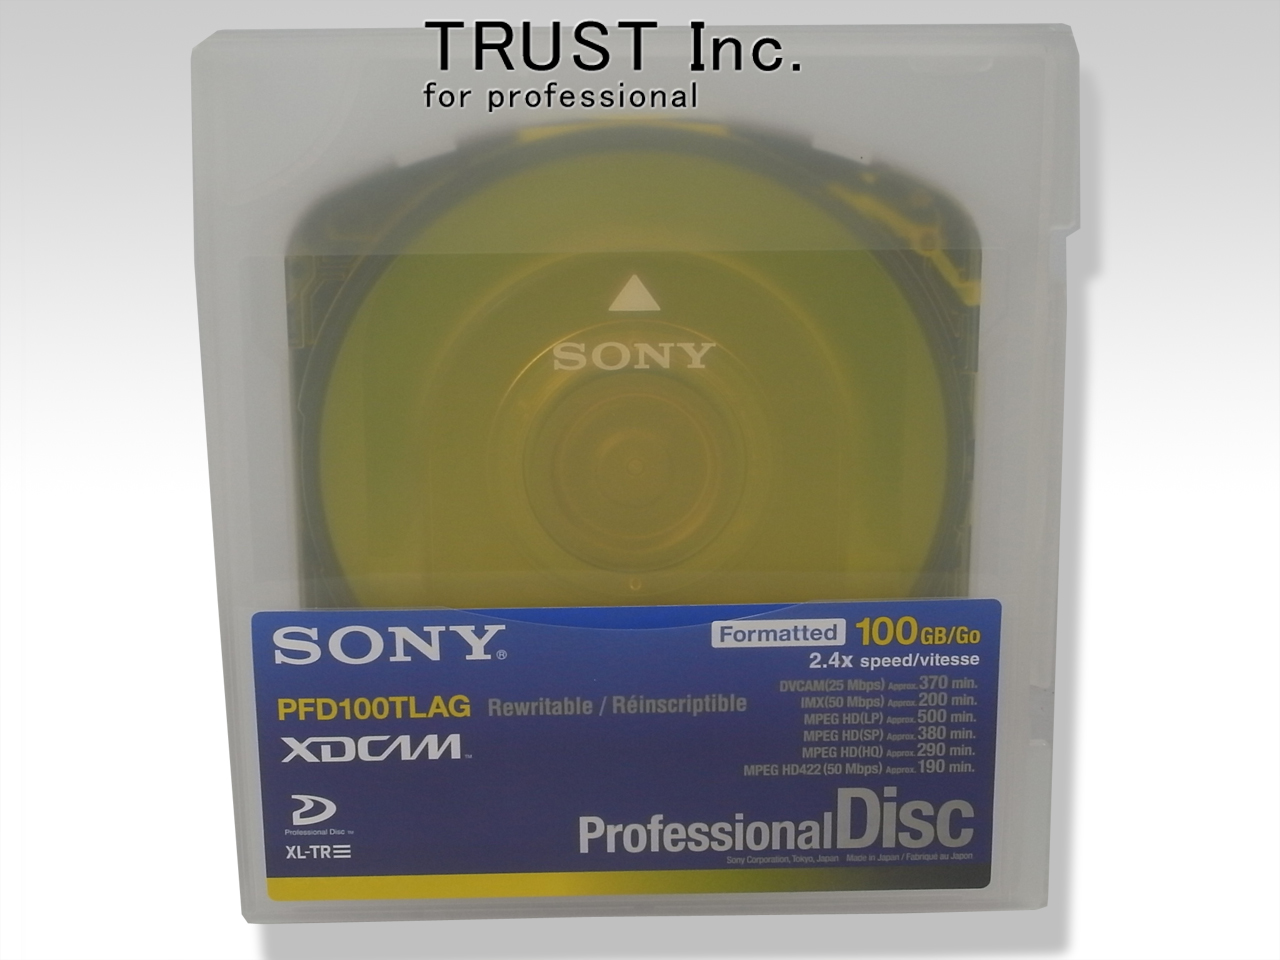 PFD100TLAG / XDCAM記録用 Professional Disc (3層)【中古放送用・業務 